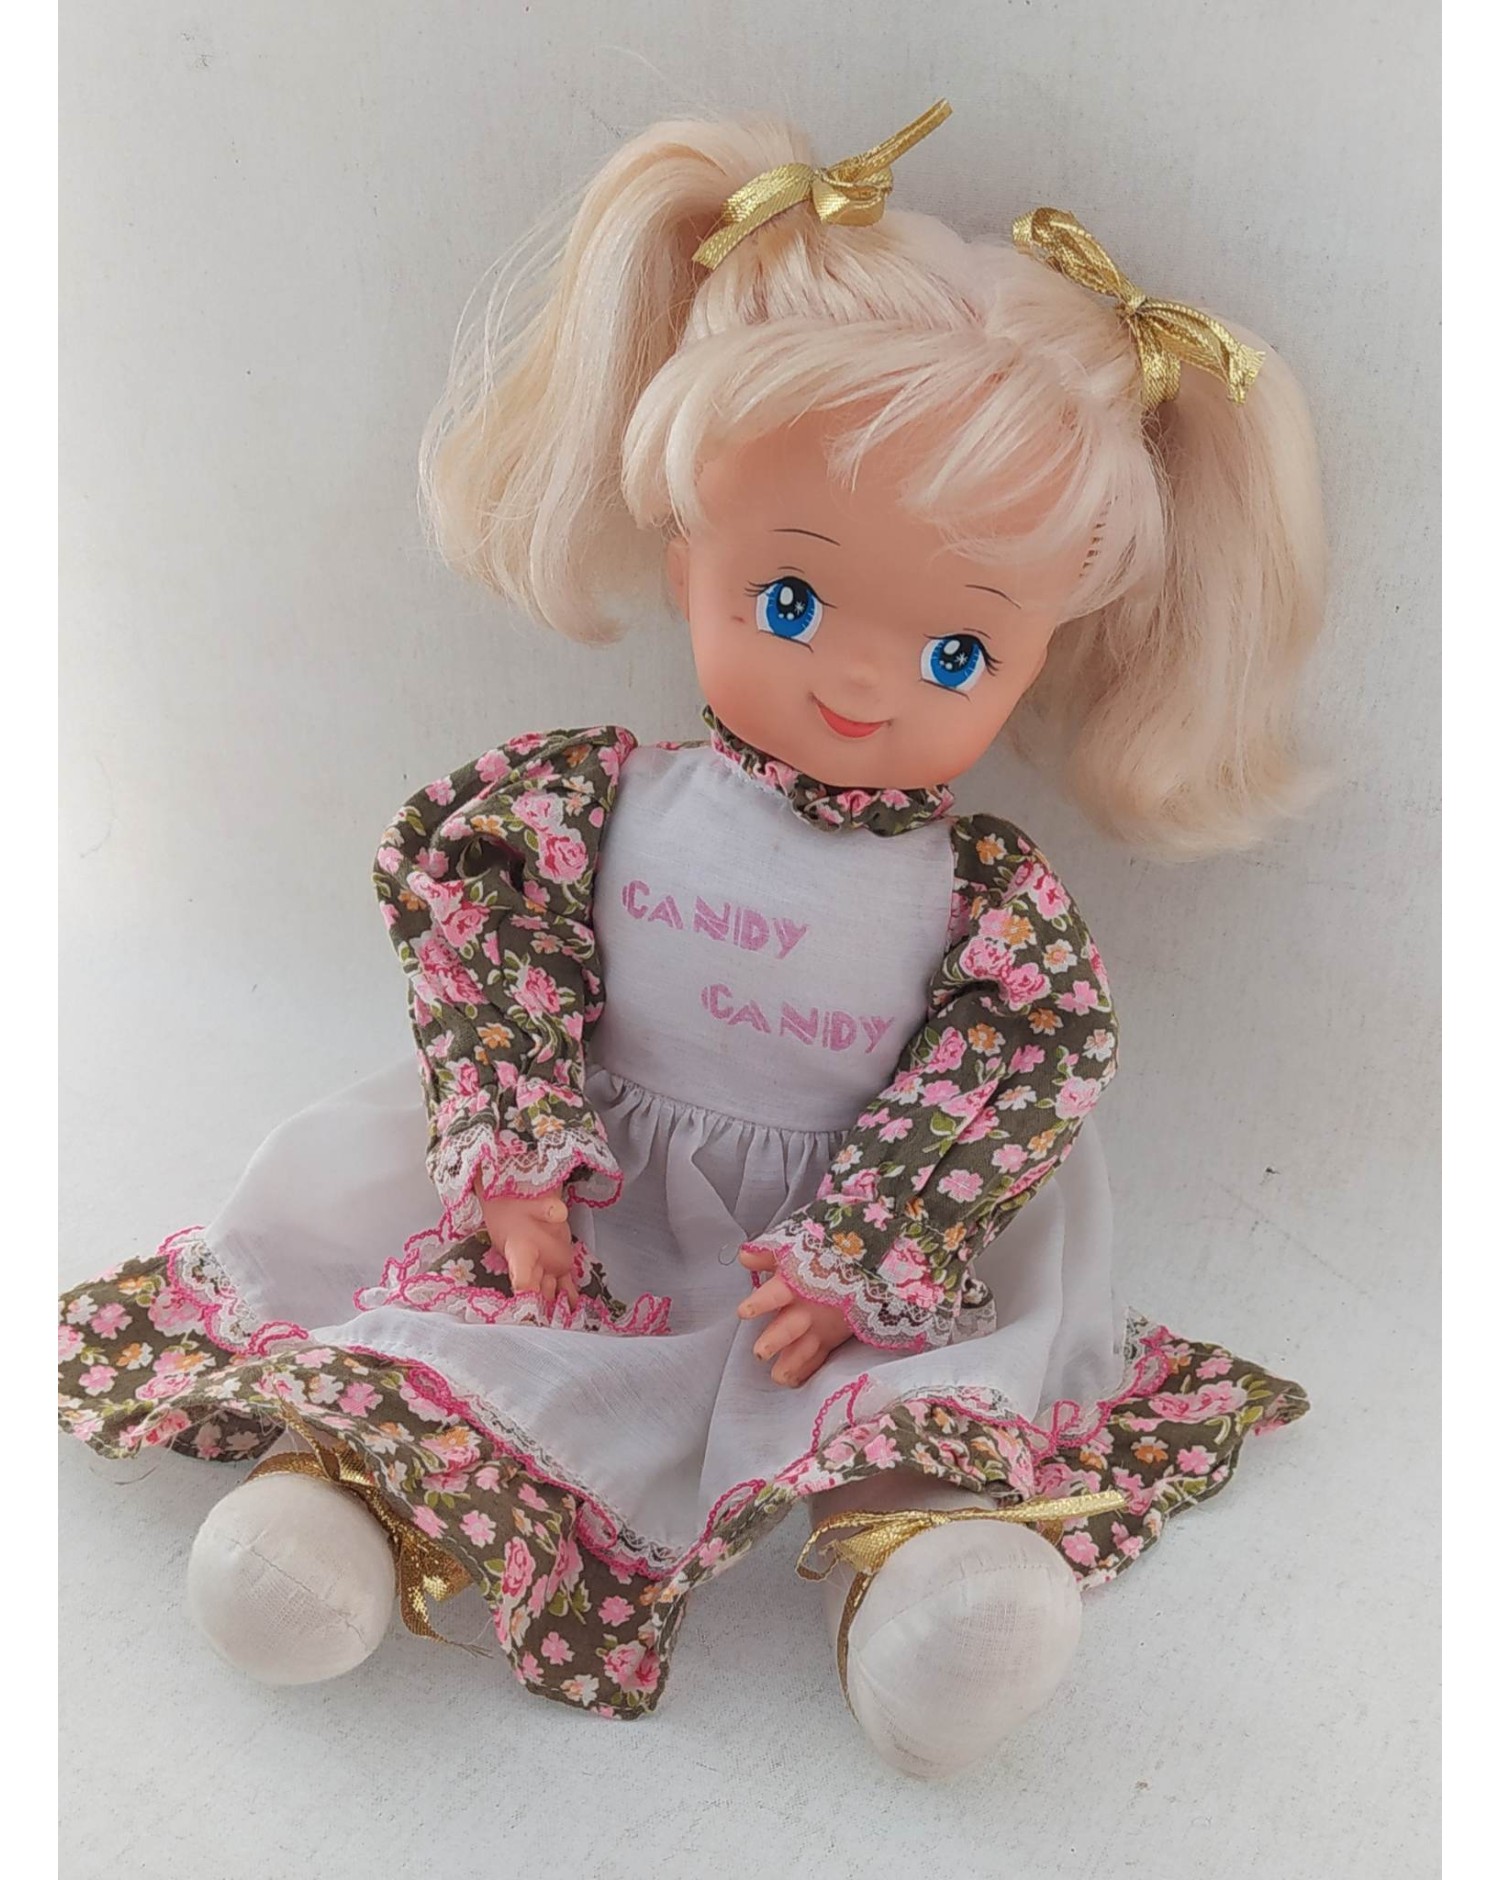 El-Greco-1980s-Candy-Candy-doll.jpg